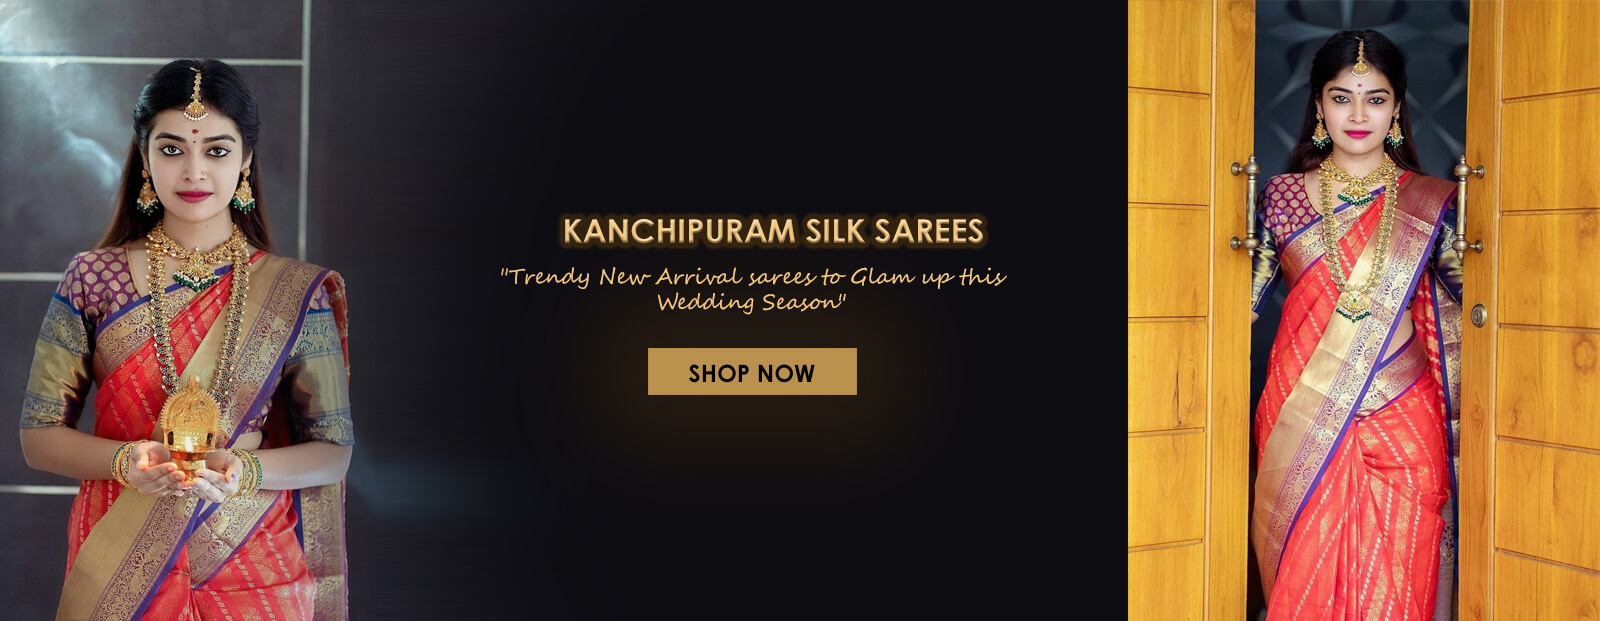 red color kanchpuram silk saree banner for wedding function online